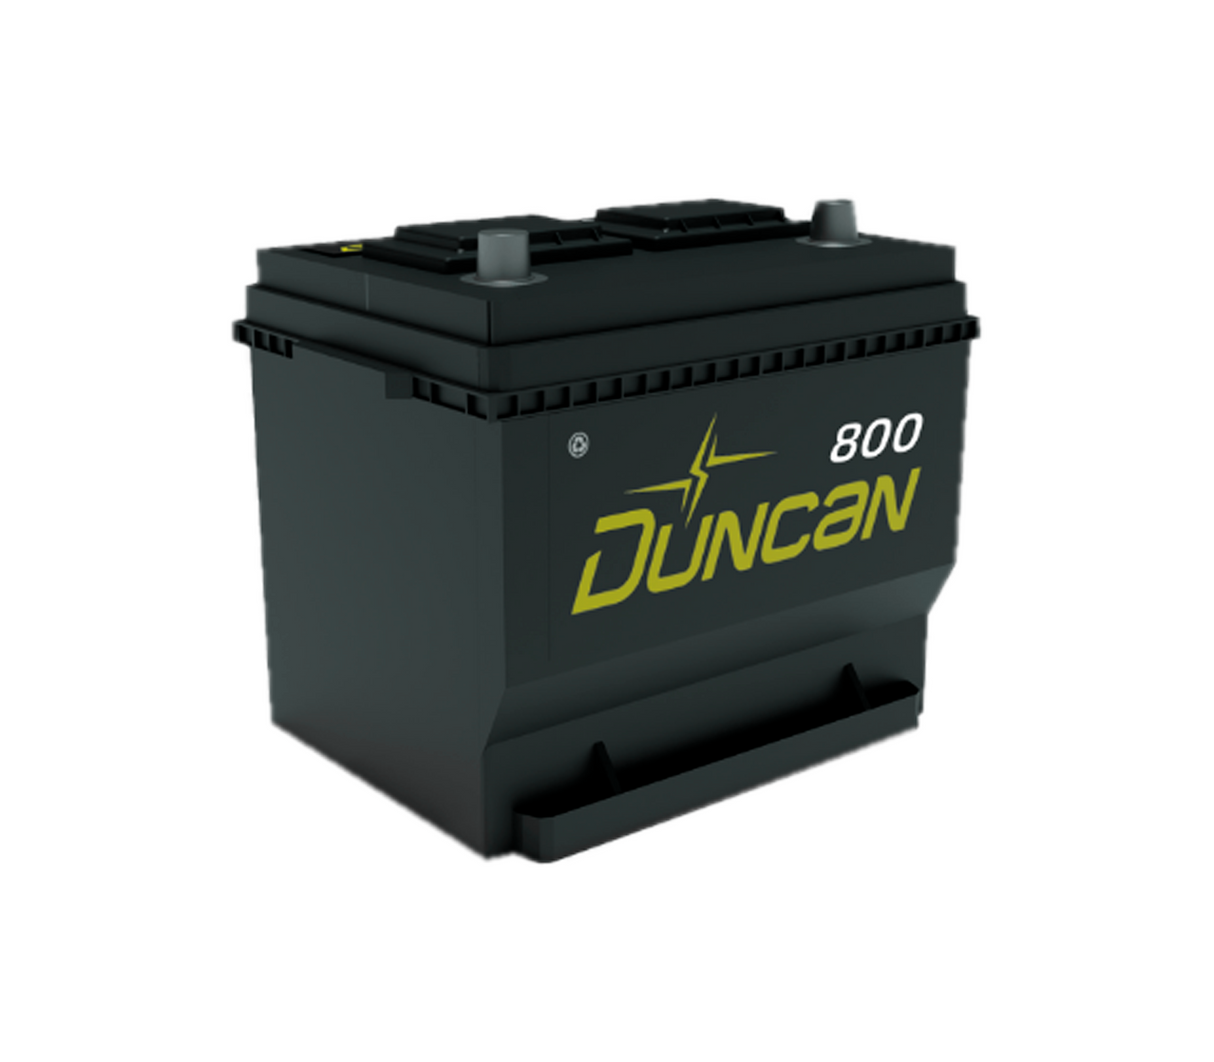 Batería de vehículo D22MR-800 Duncan